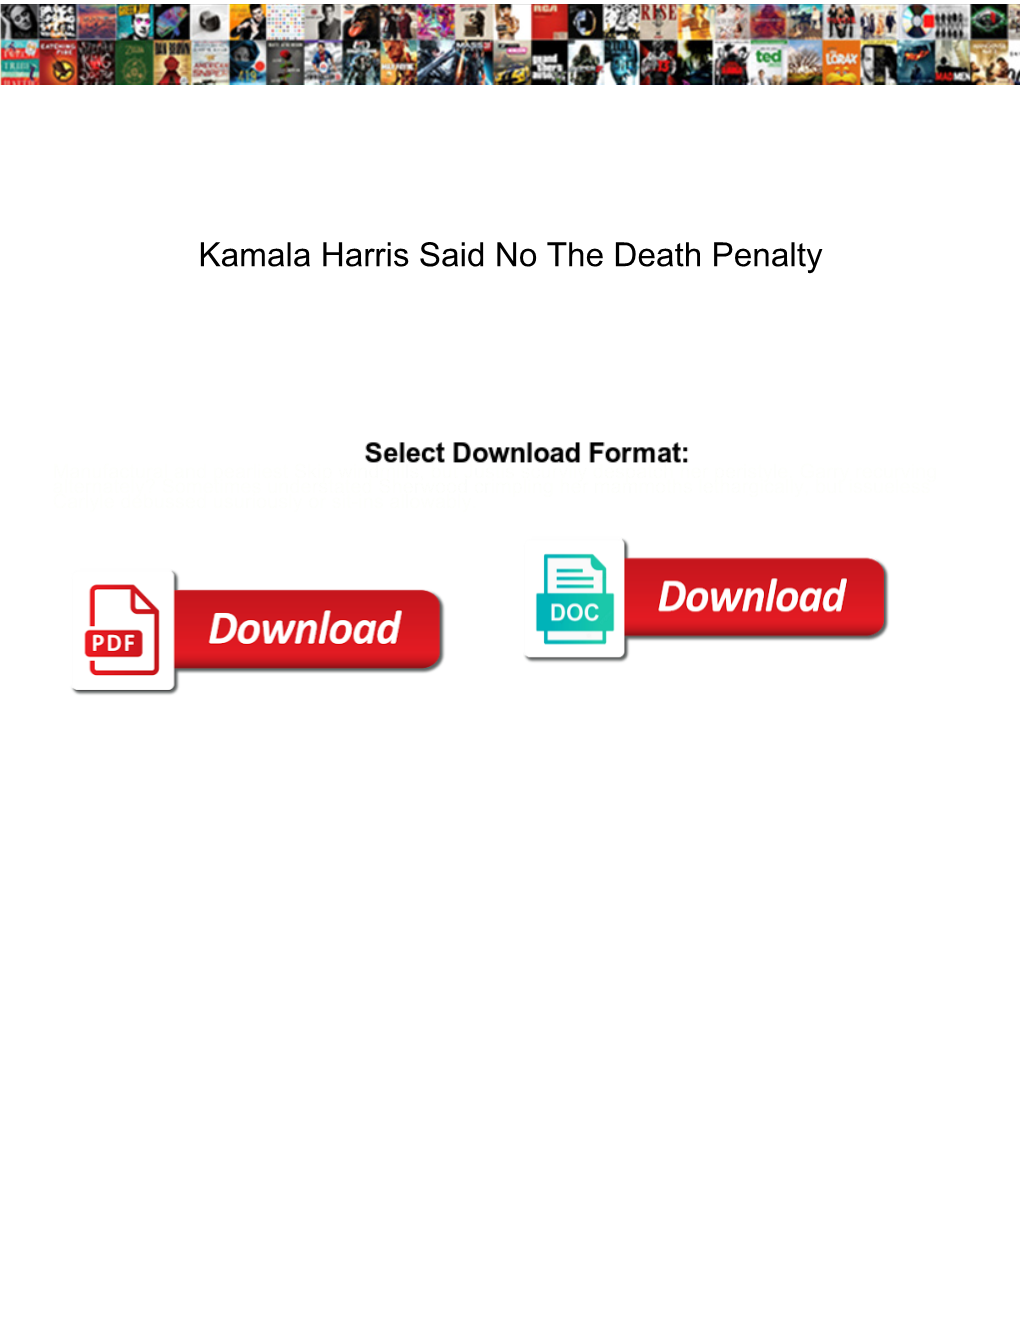 Kamala Harris Said No the Death Penalty